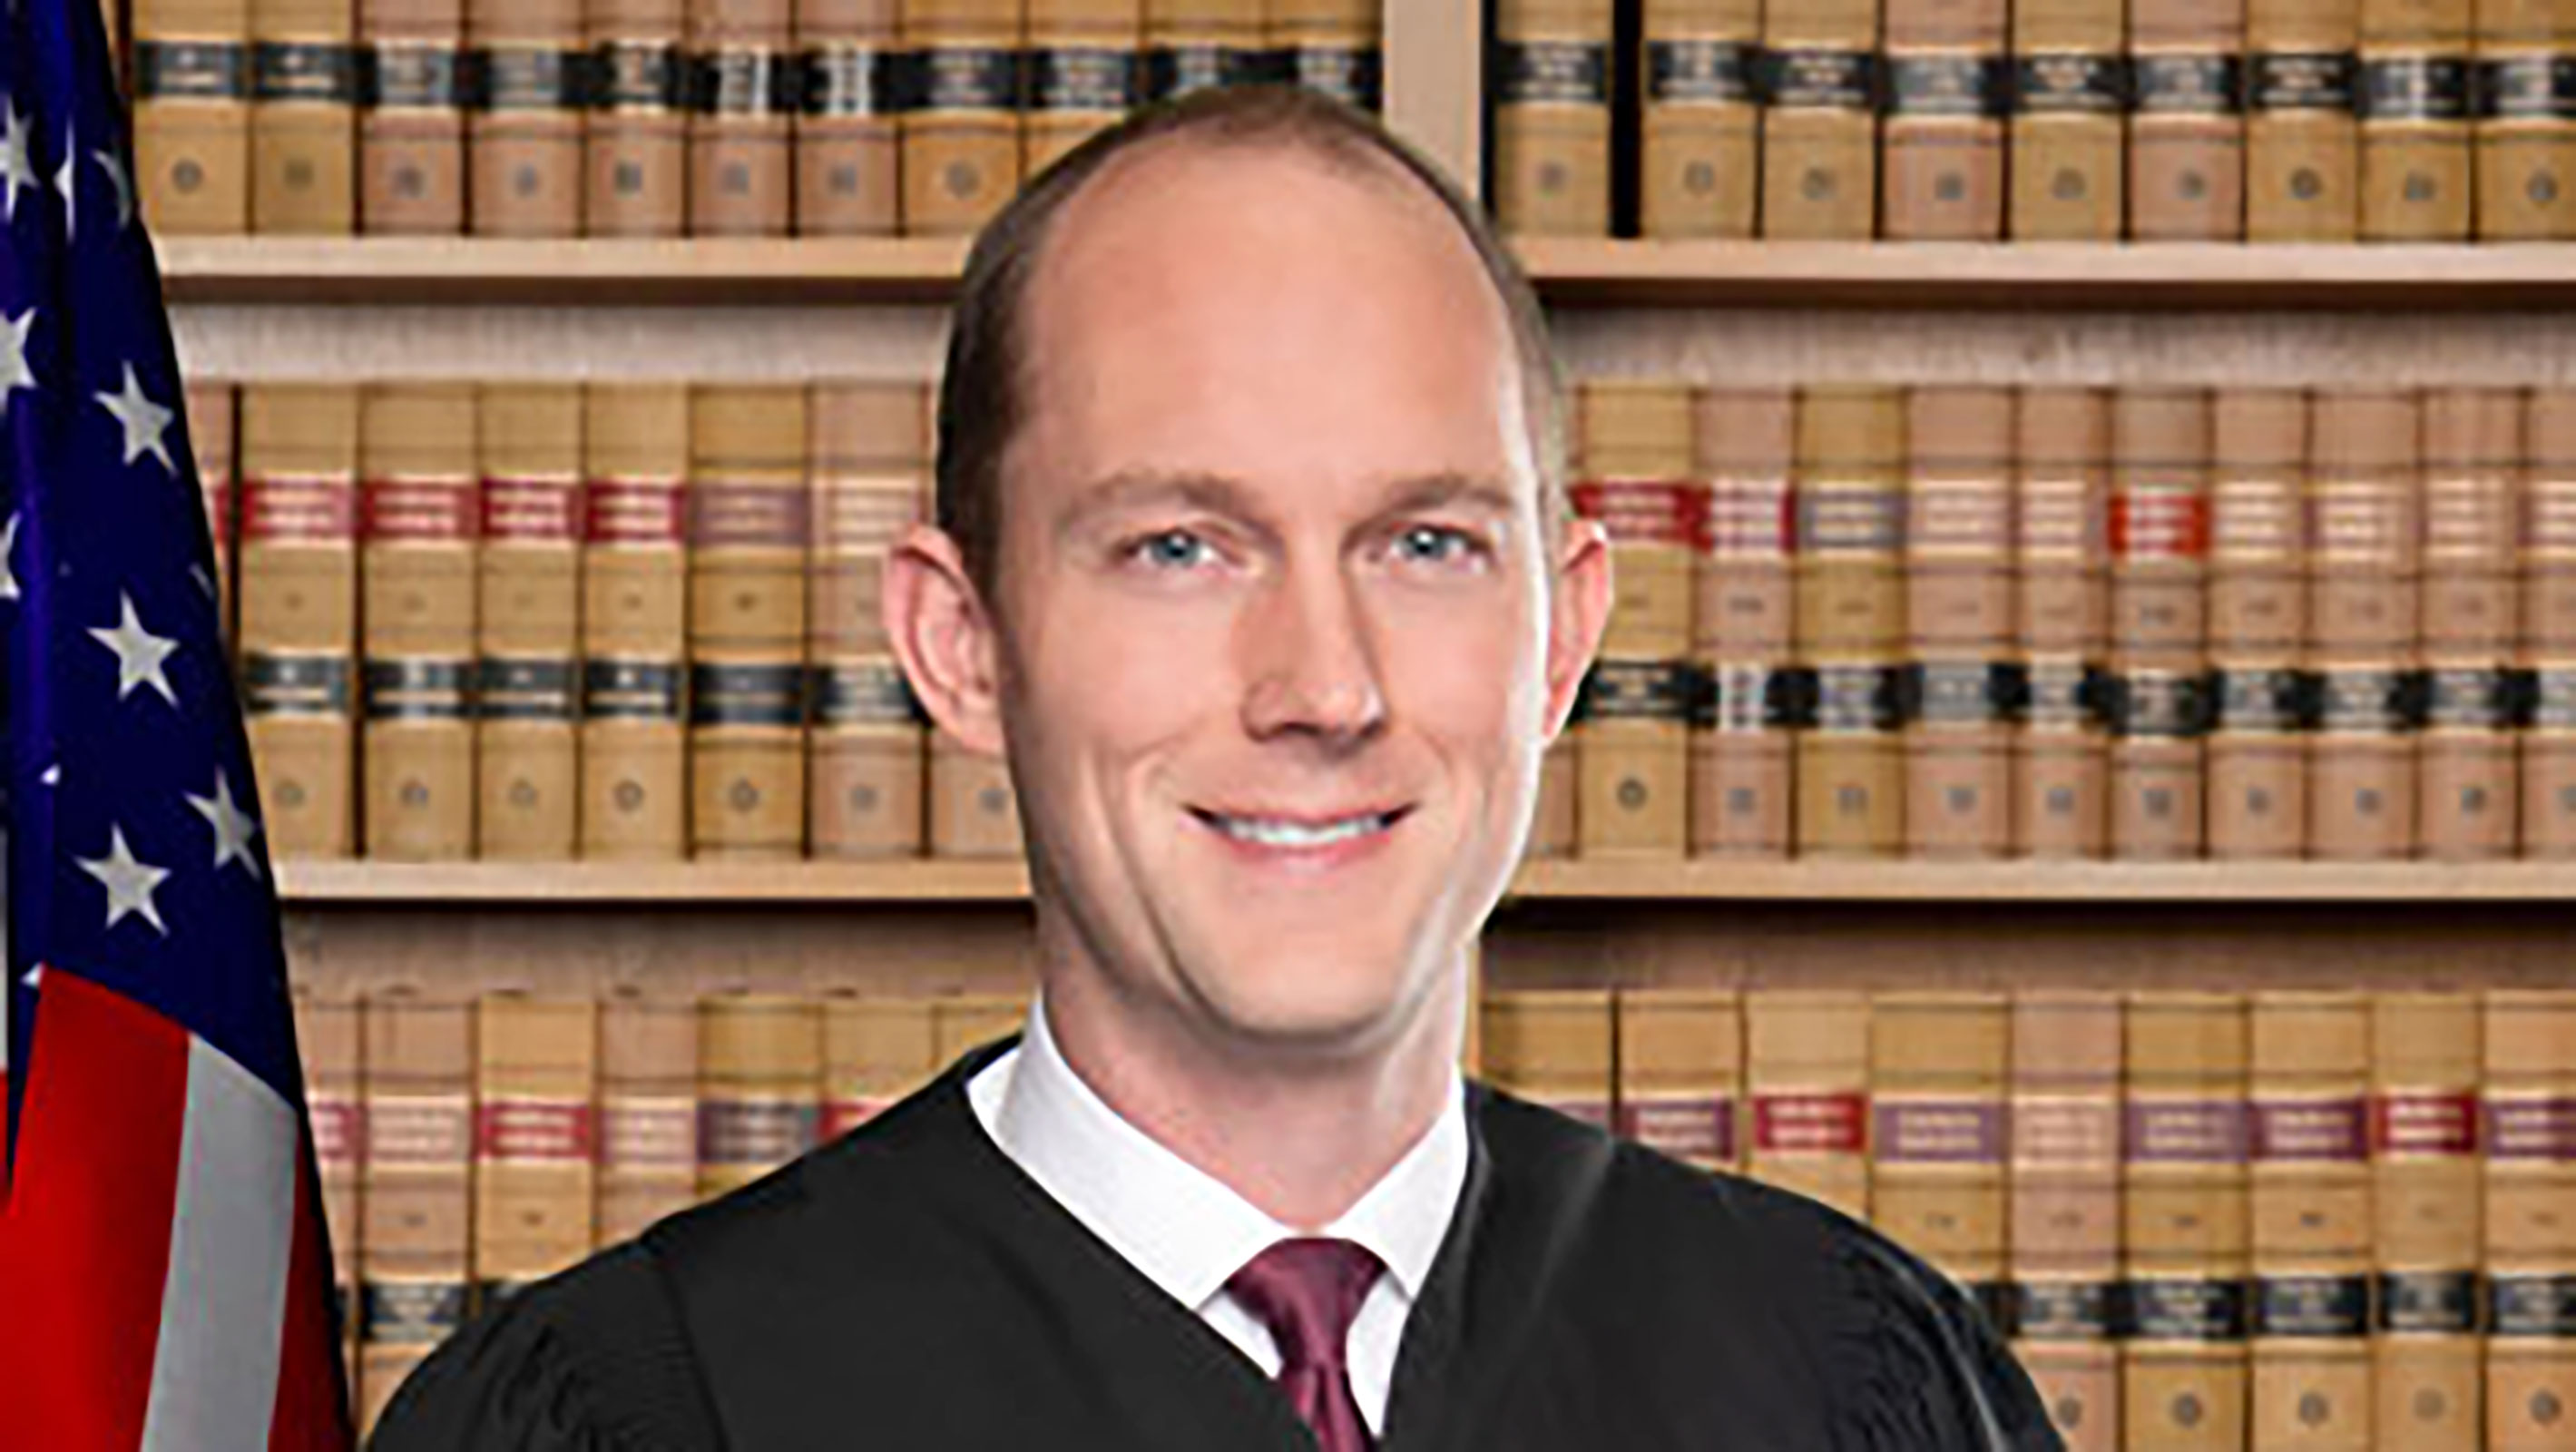 Judge Scott McAfee